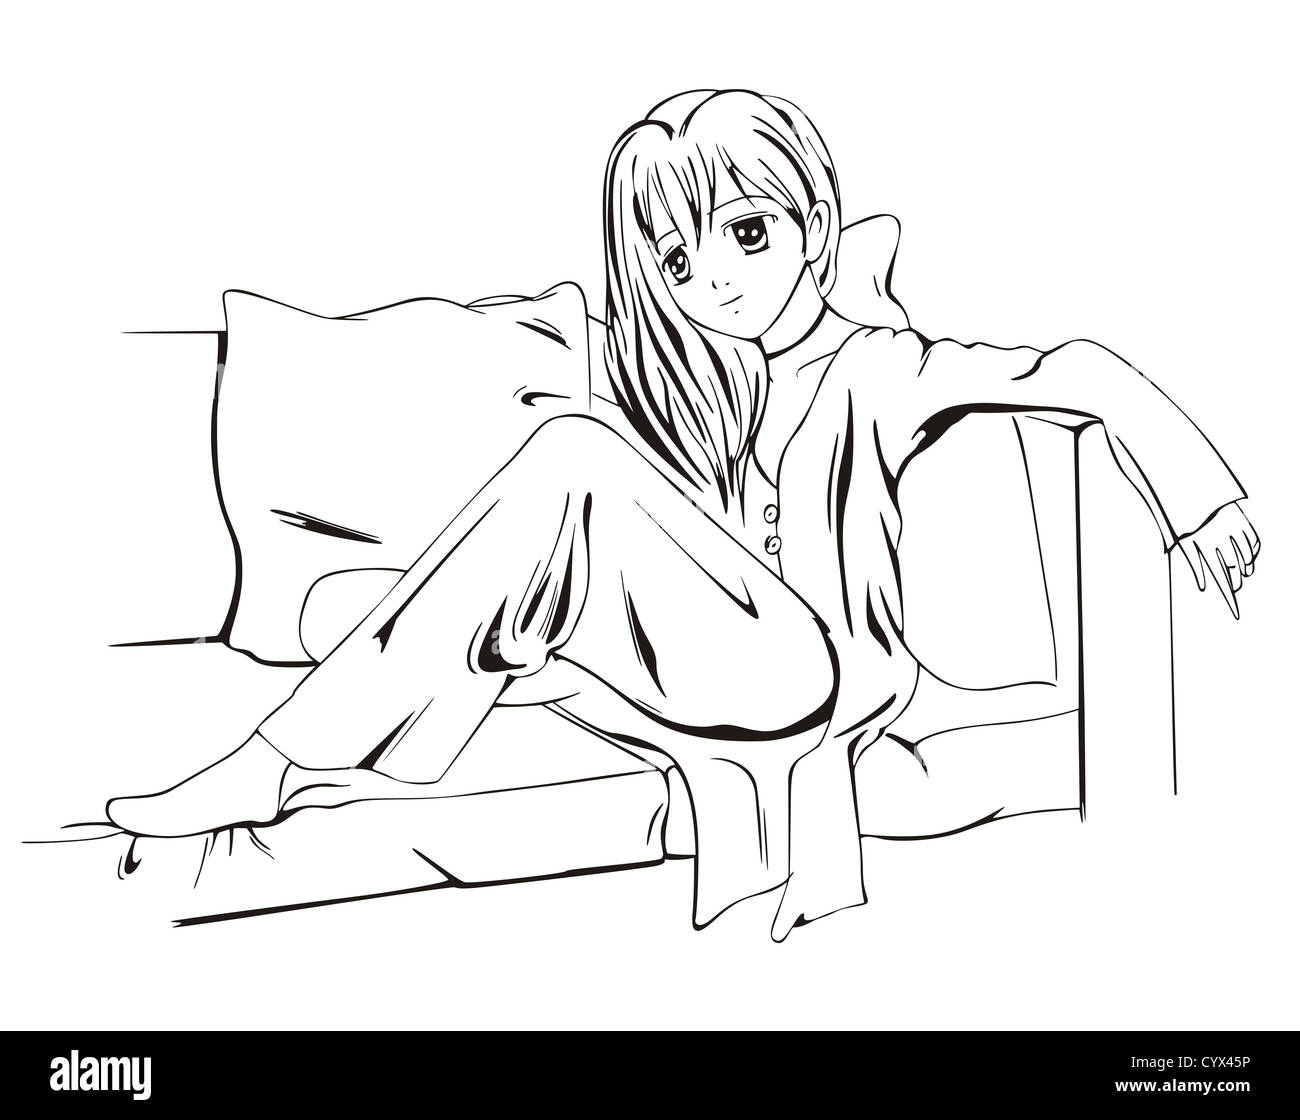 HD wallpaper orangehaired female anime character sitting on rock  illustration  Wallpaper Flare